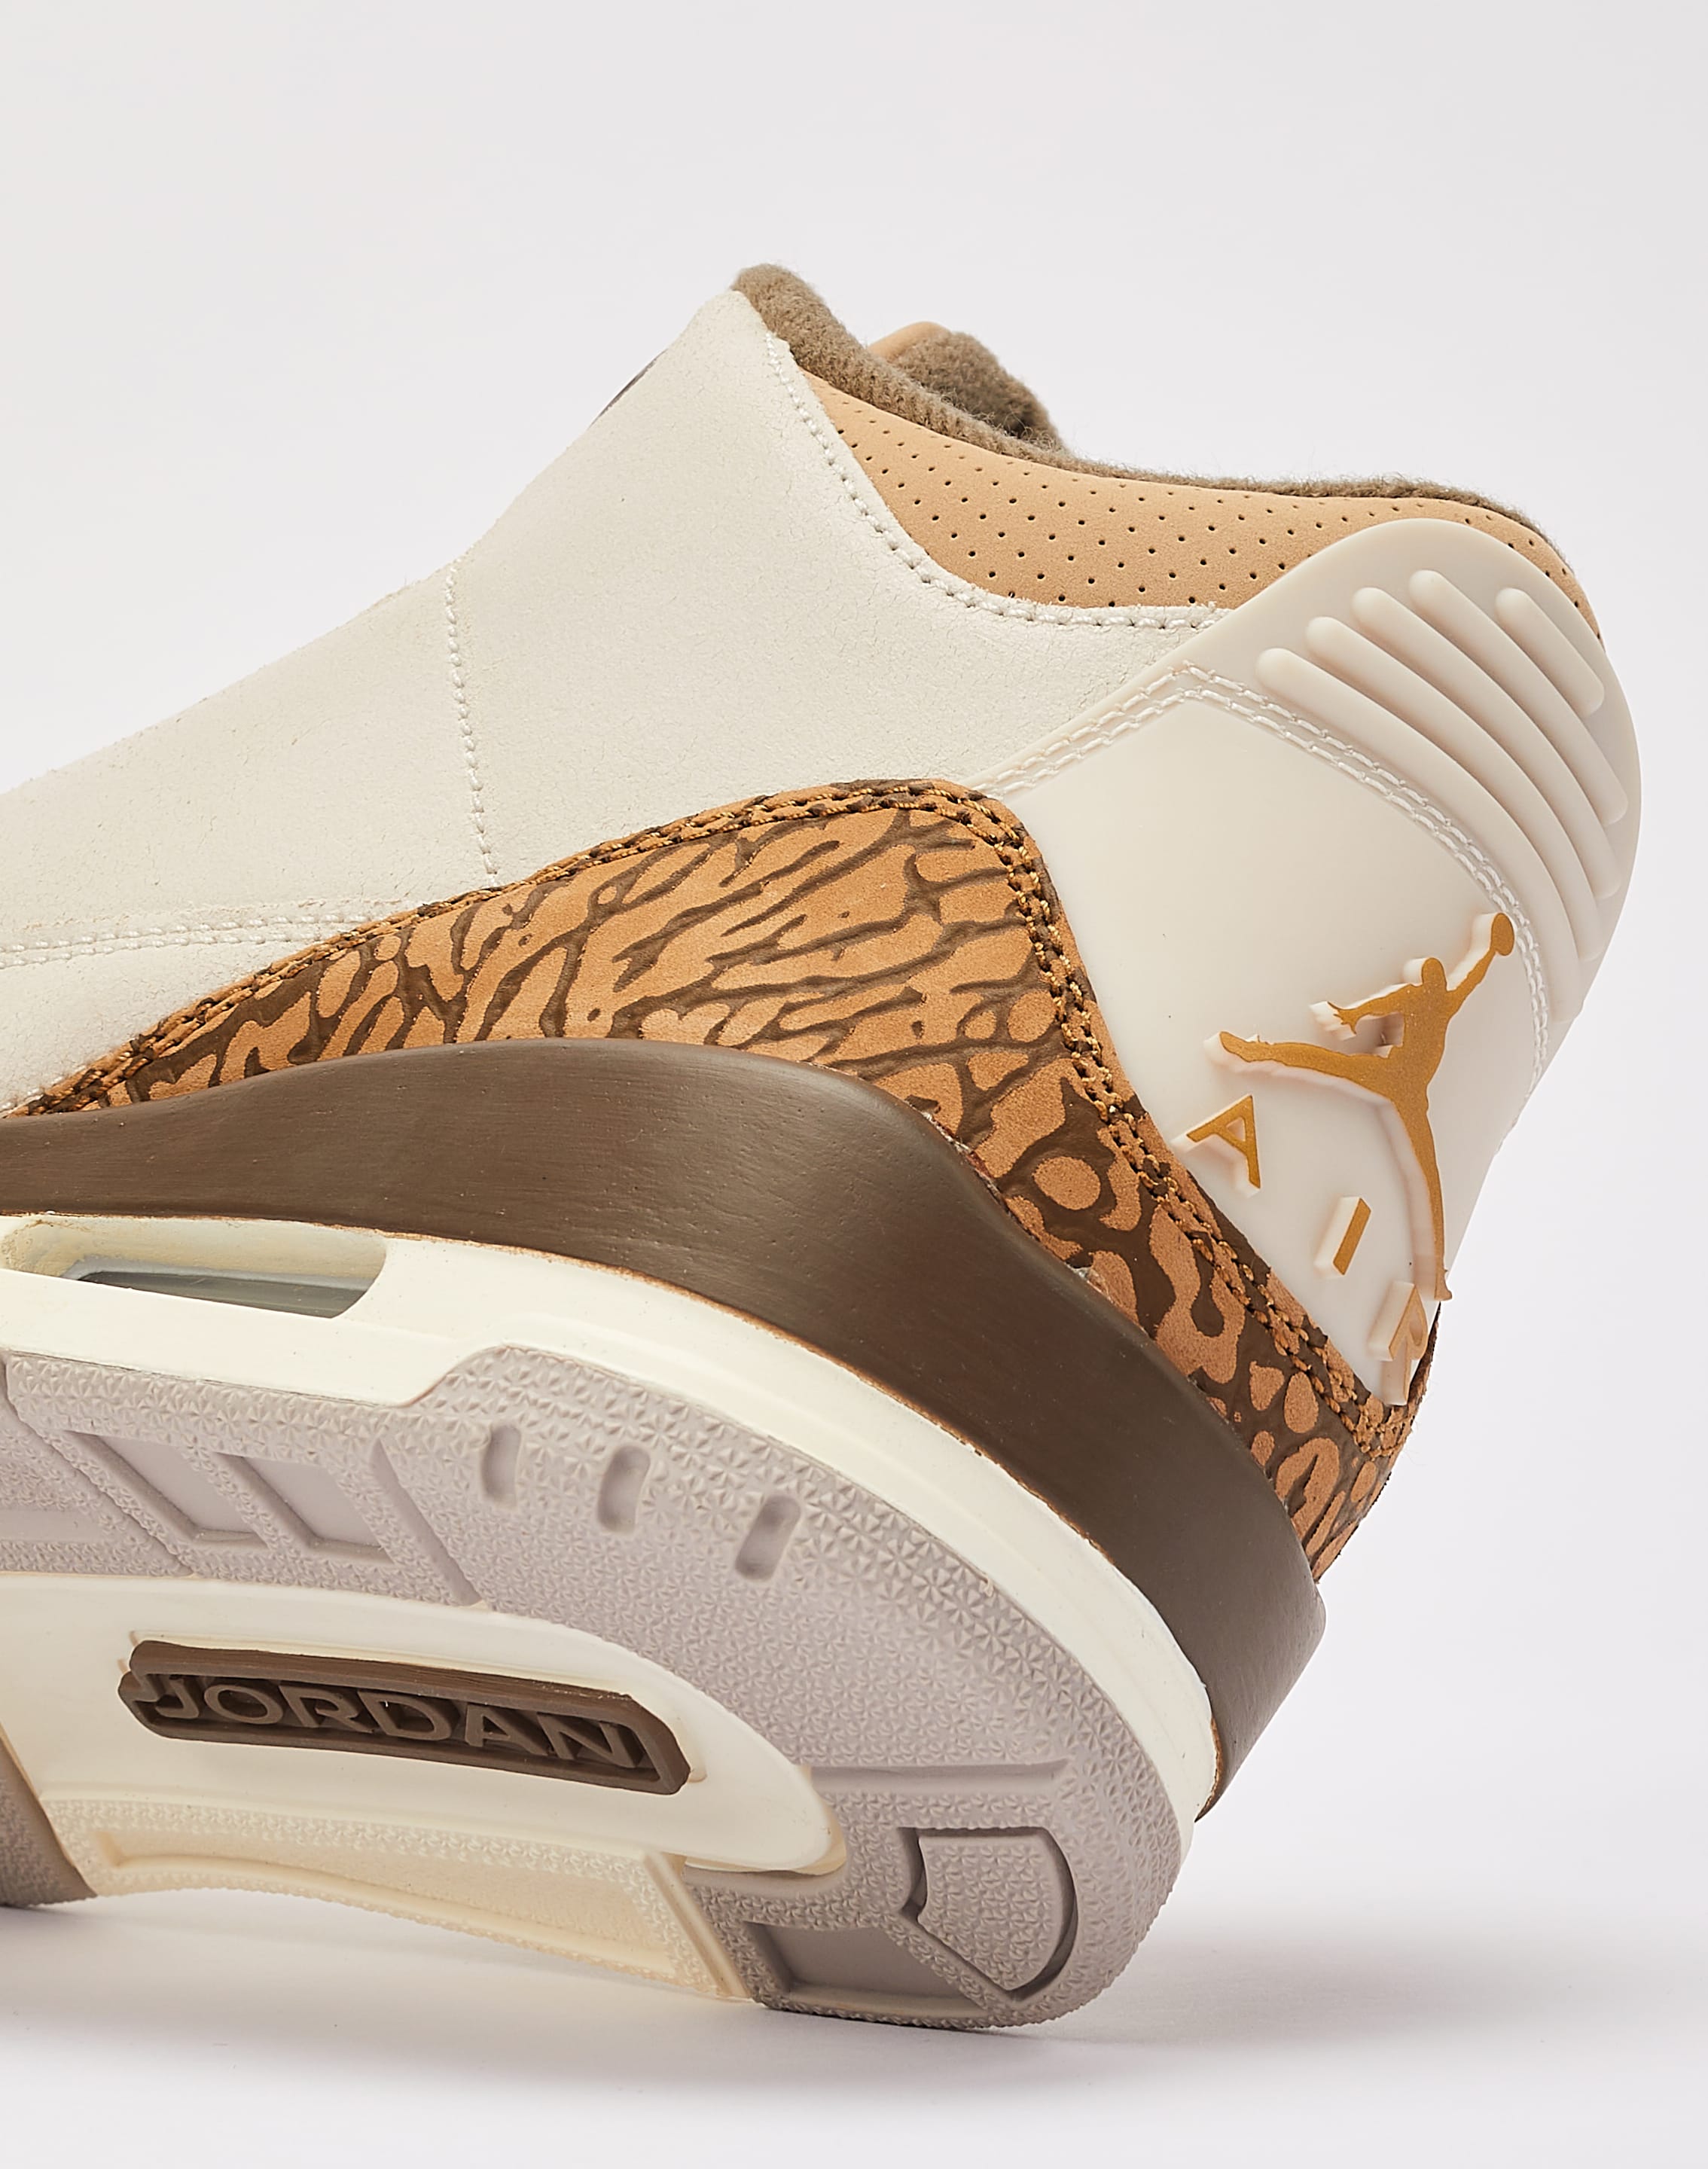 Air Jordan 3 'Orewood Brown' (CT8532-102) Release Date. Nike SNKRS